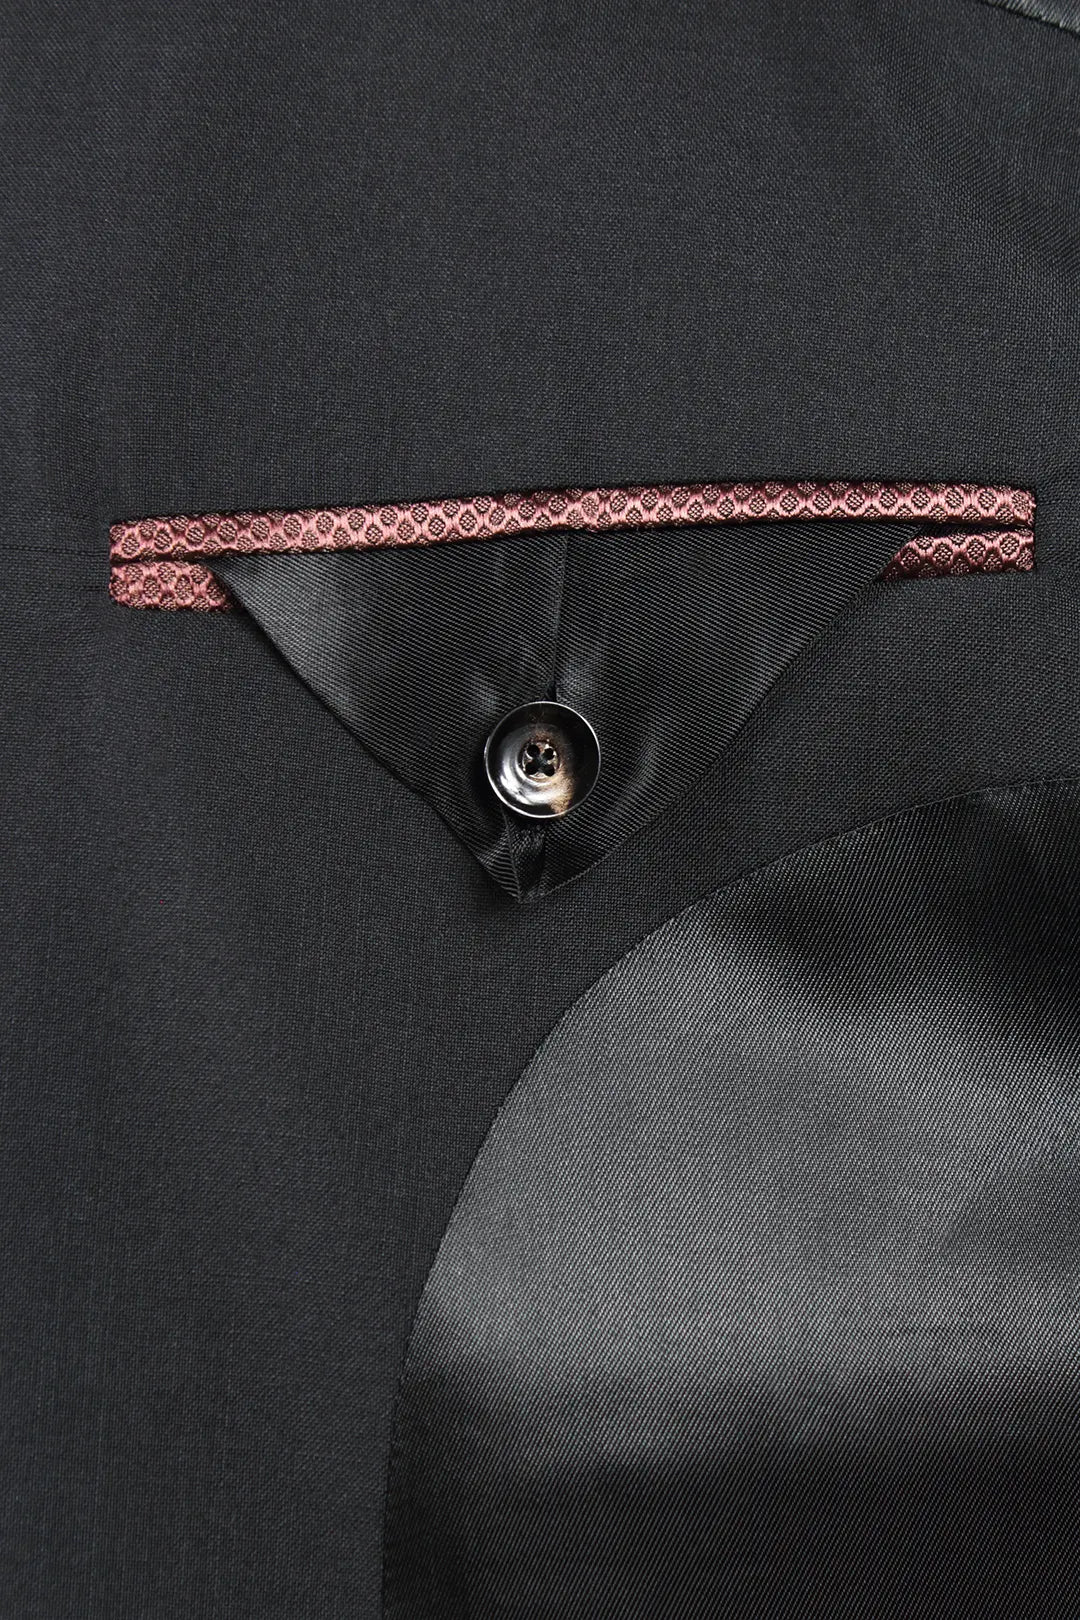 Giacca tela di lana nera rever profilato blu interno